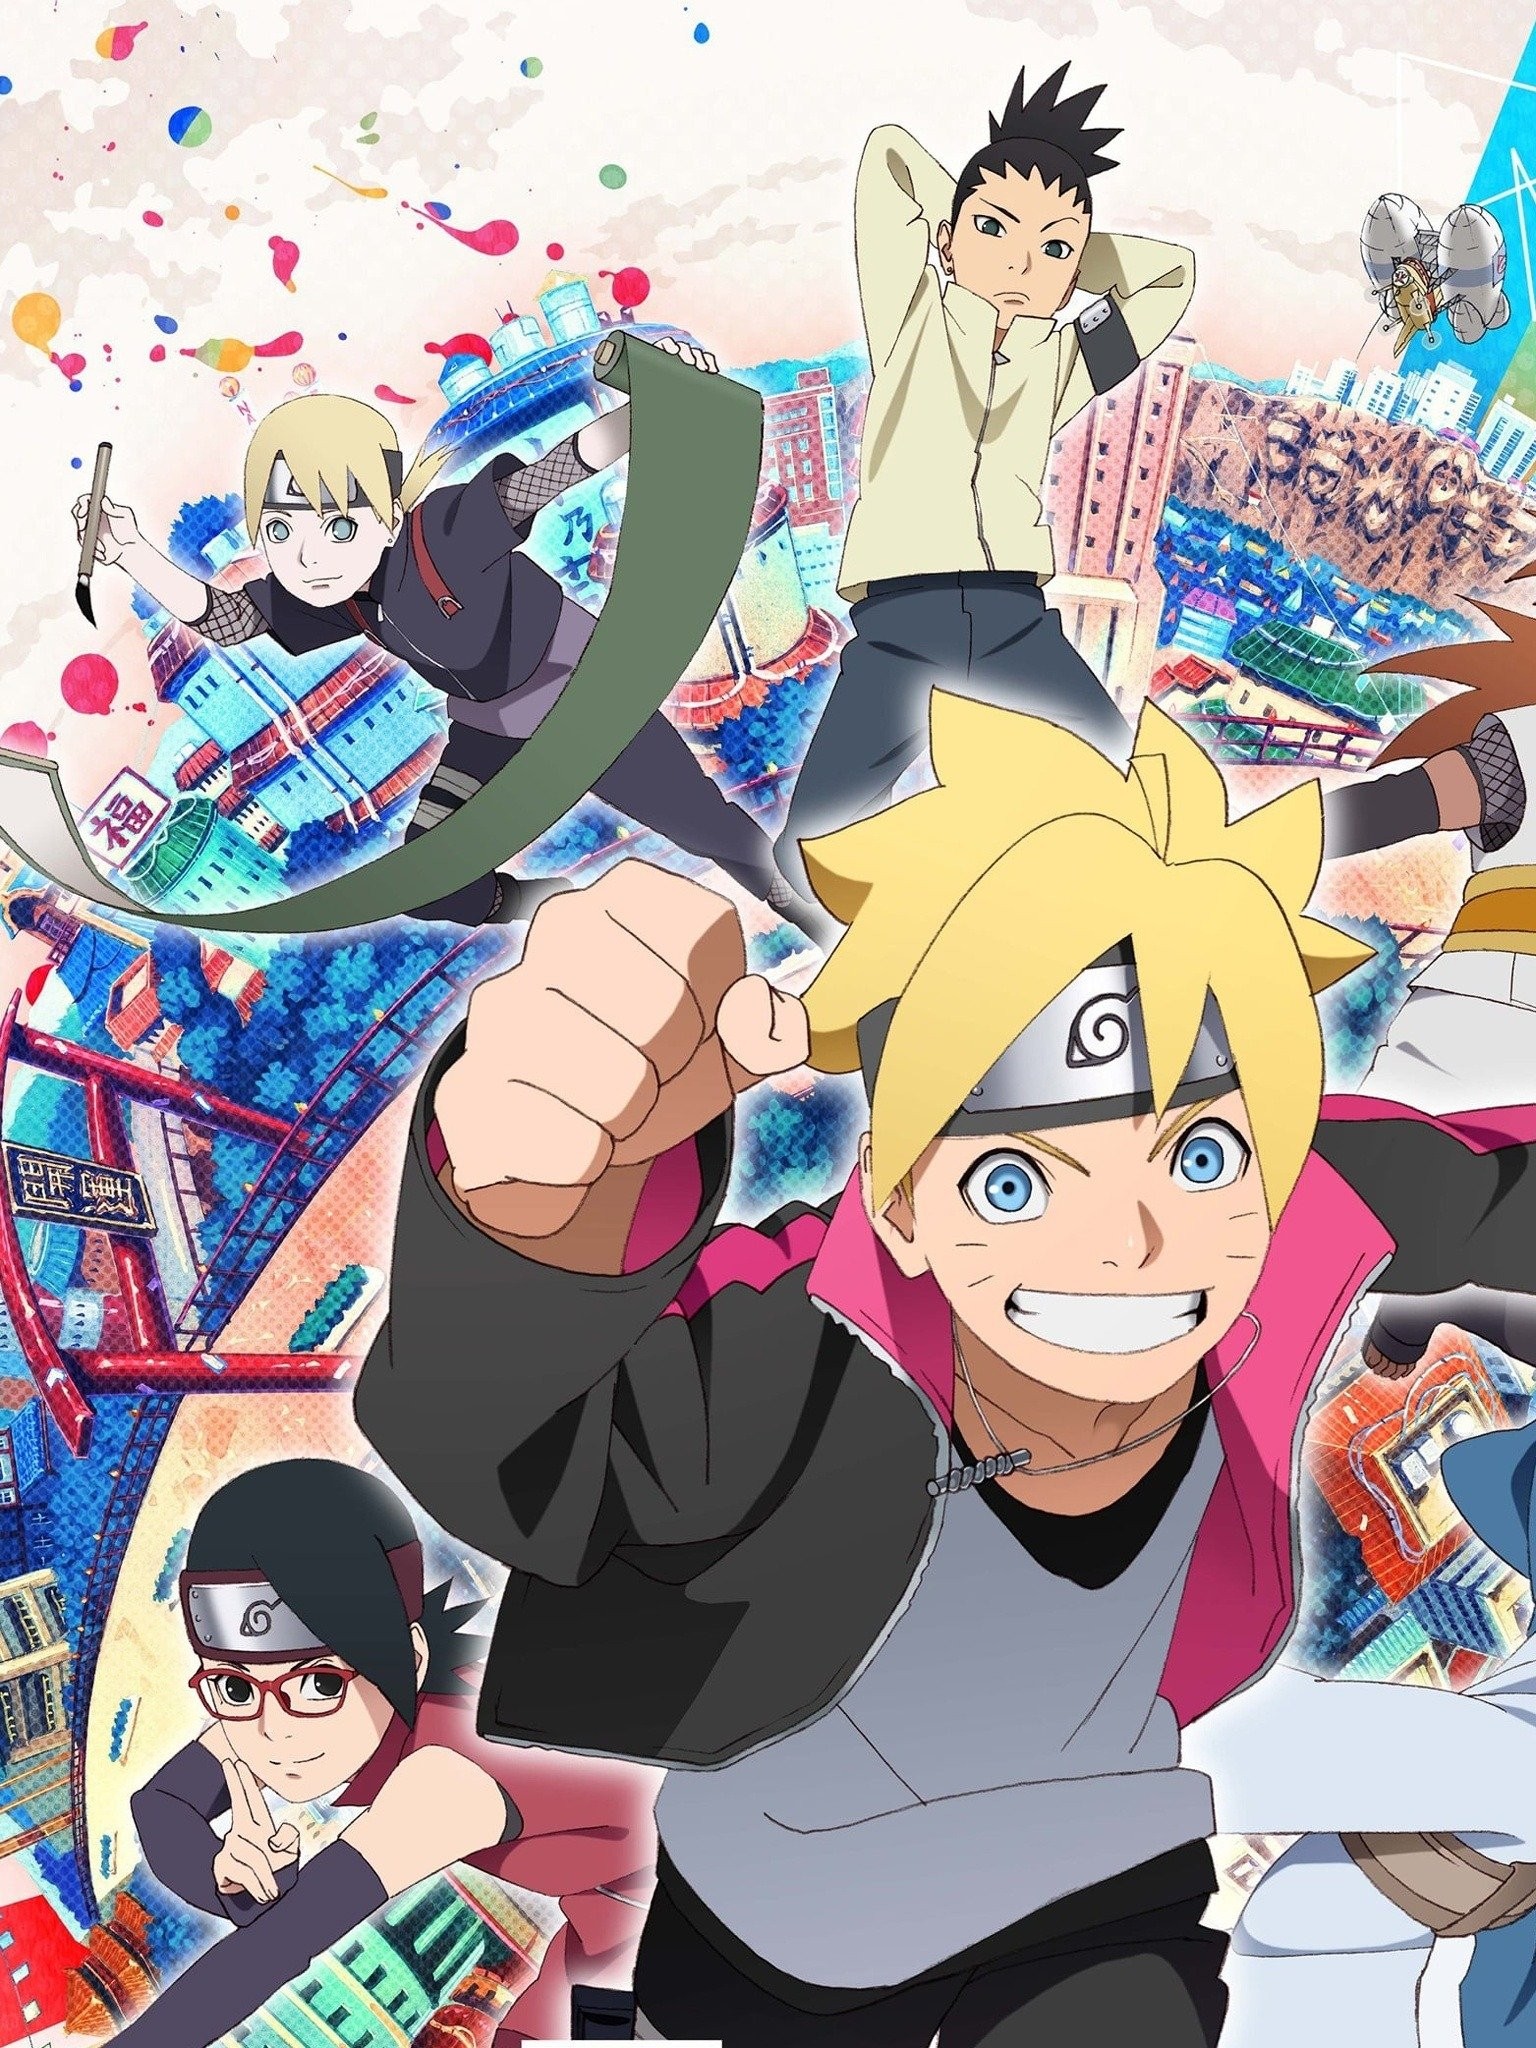  Anime 'Boruto: Naruto Next Generations